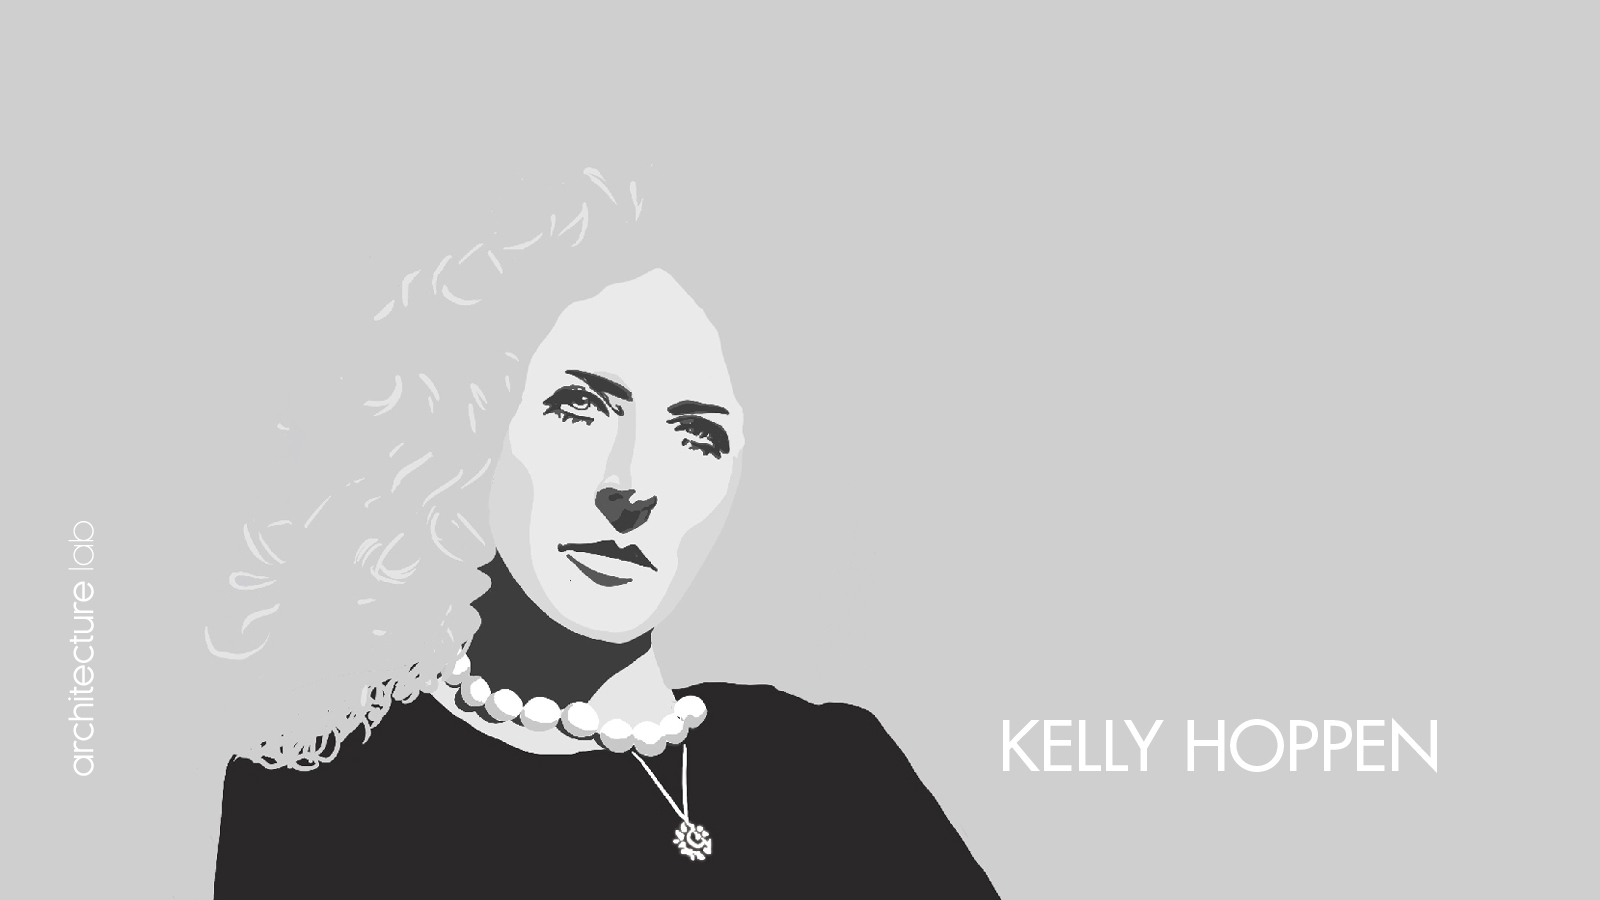 Kelly hoppen: biography, works, awards